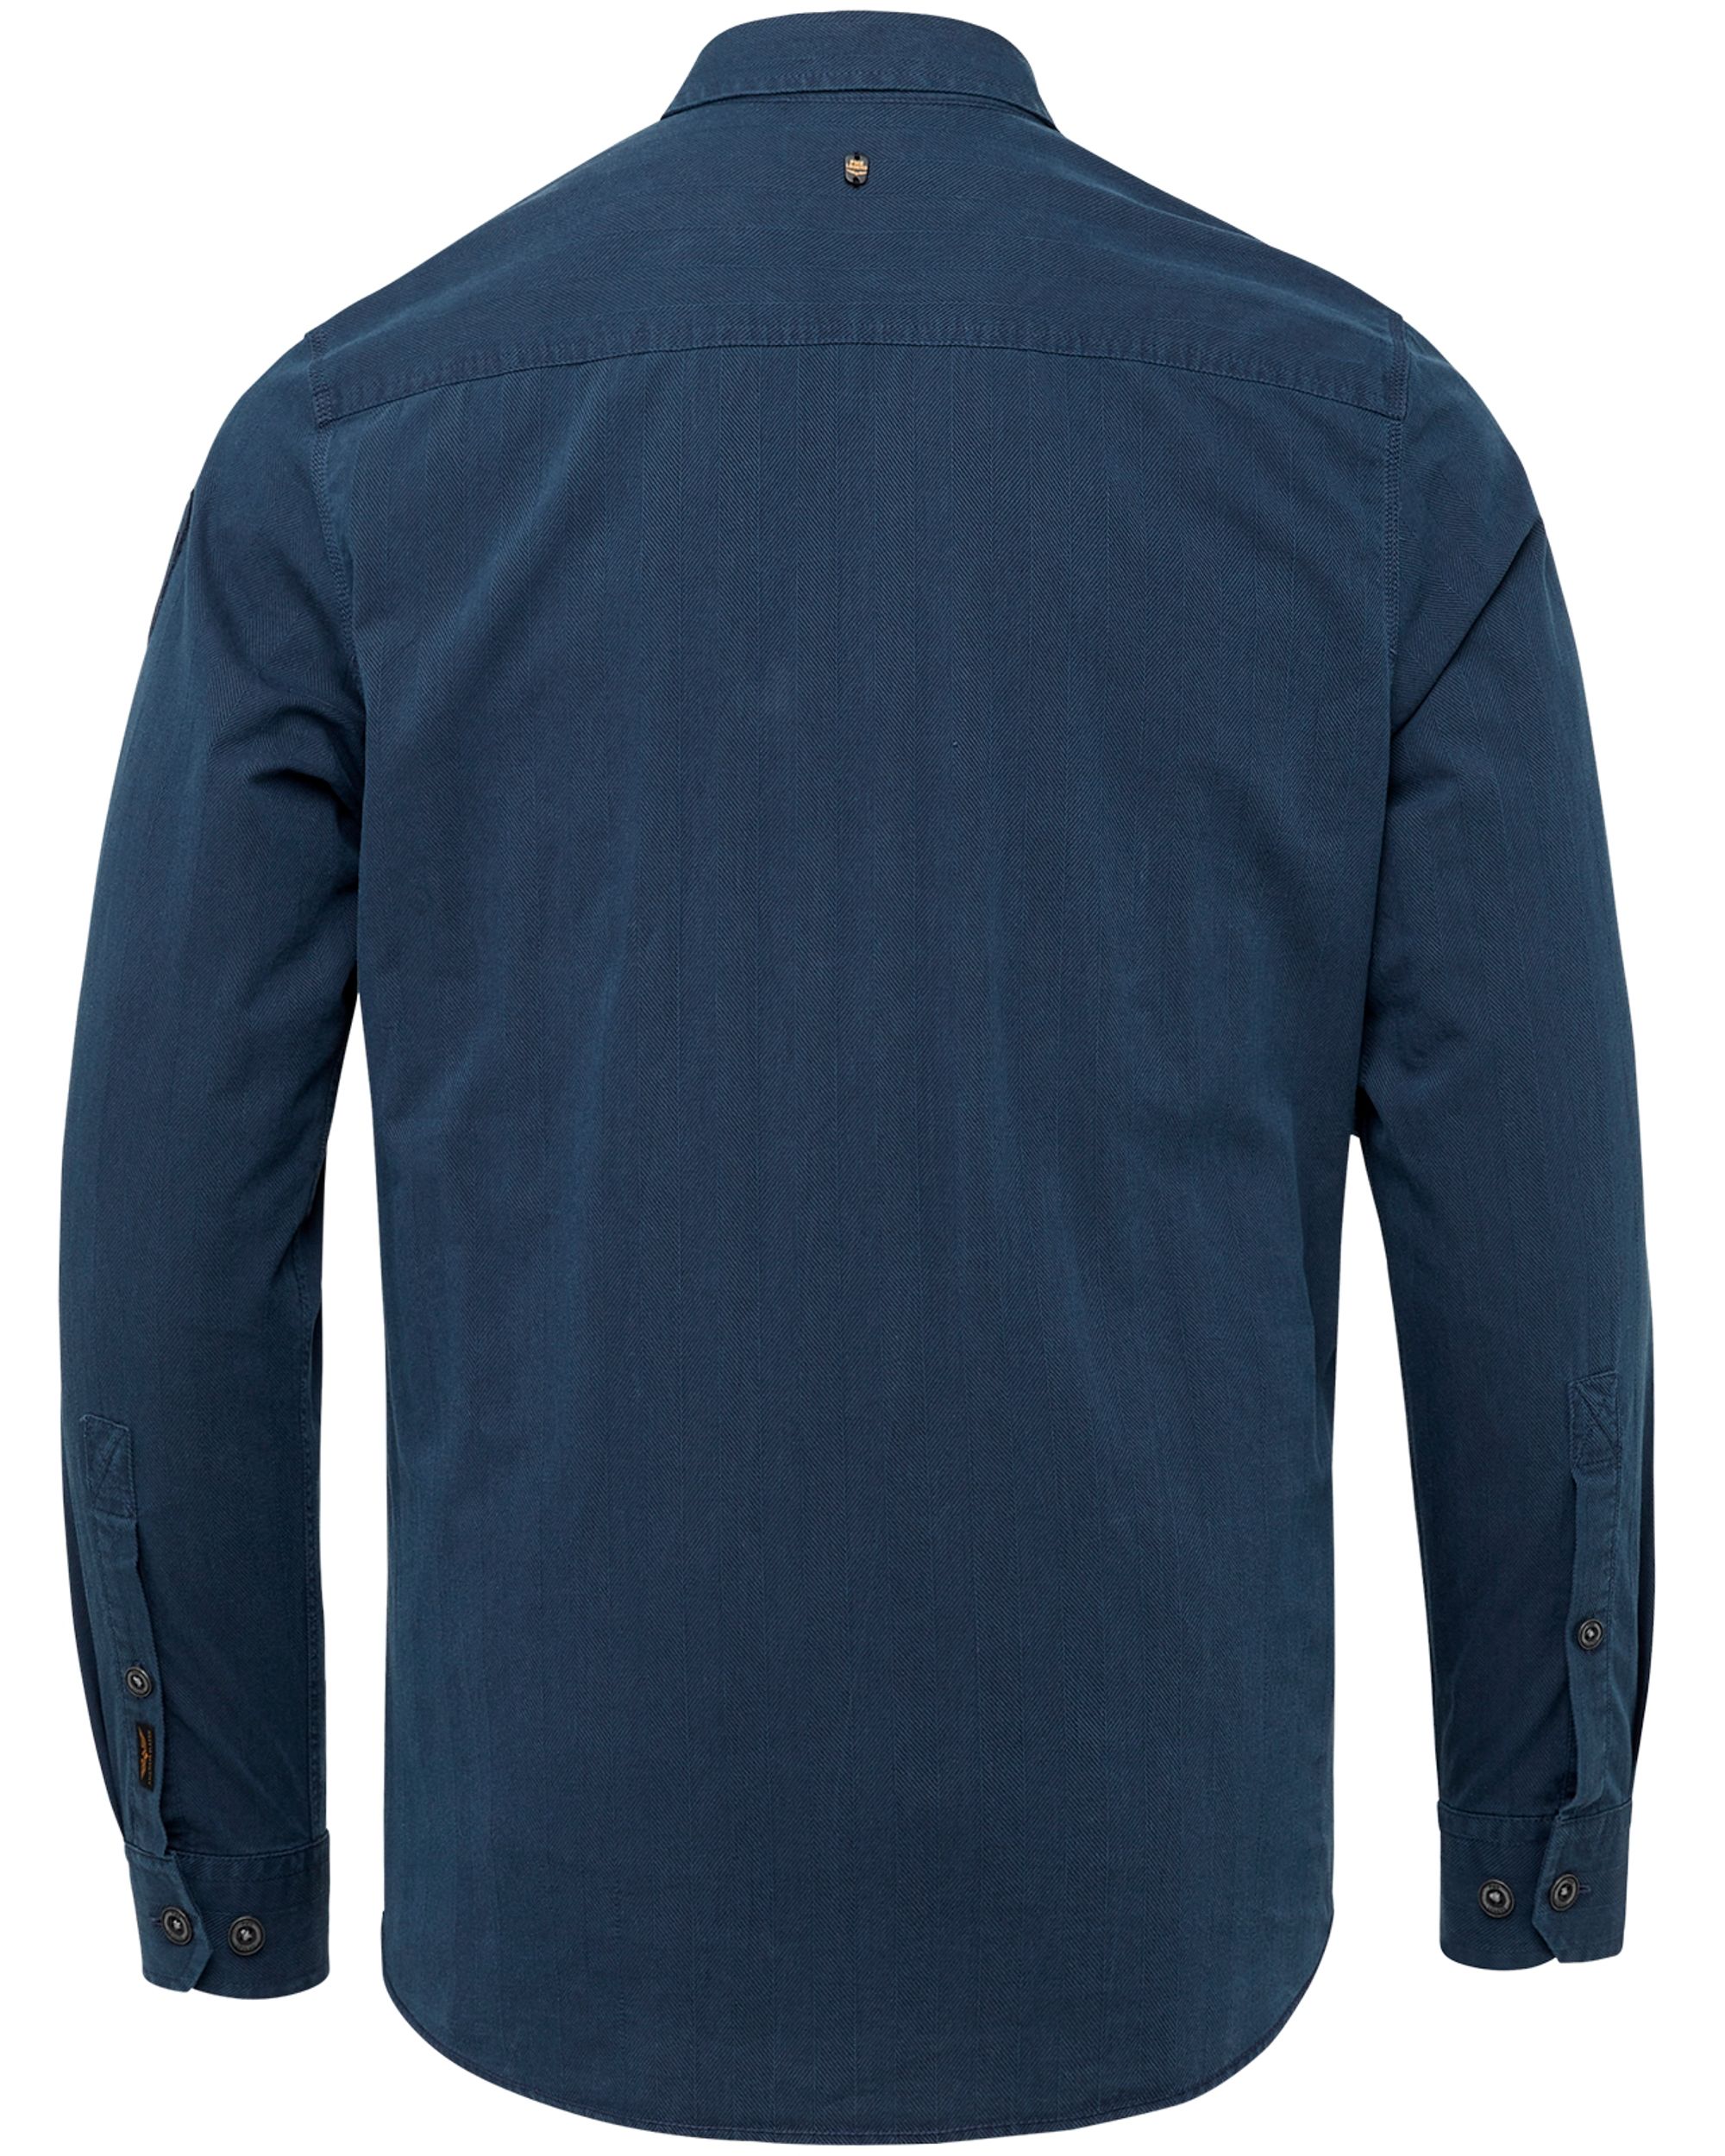 PME Legend Casual Overhemd LM Blauw 081386-001-L